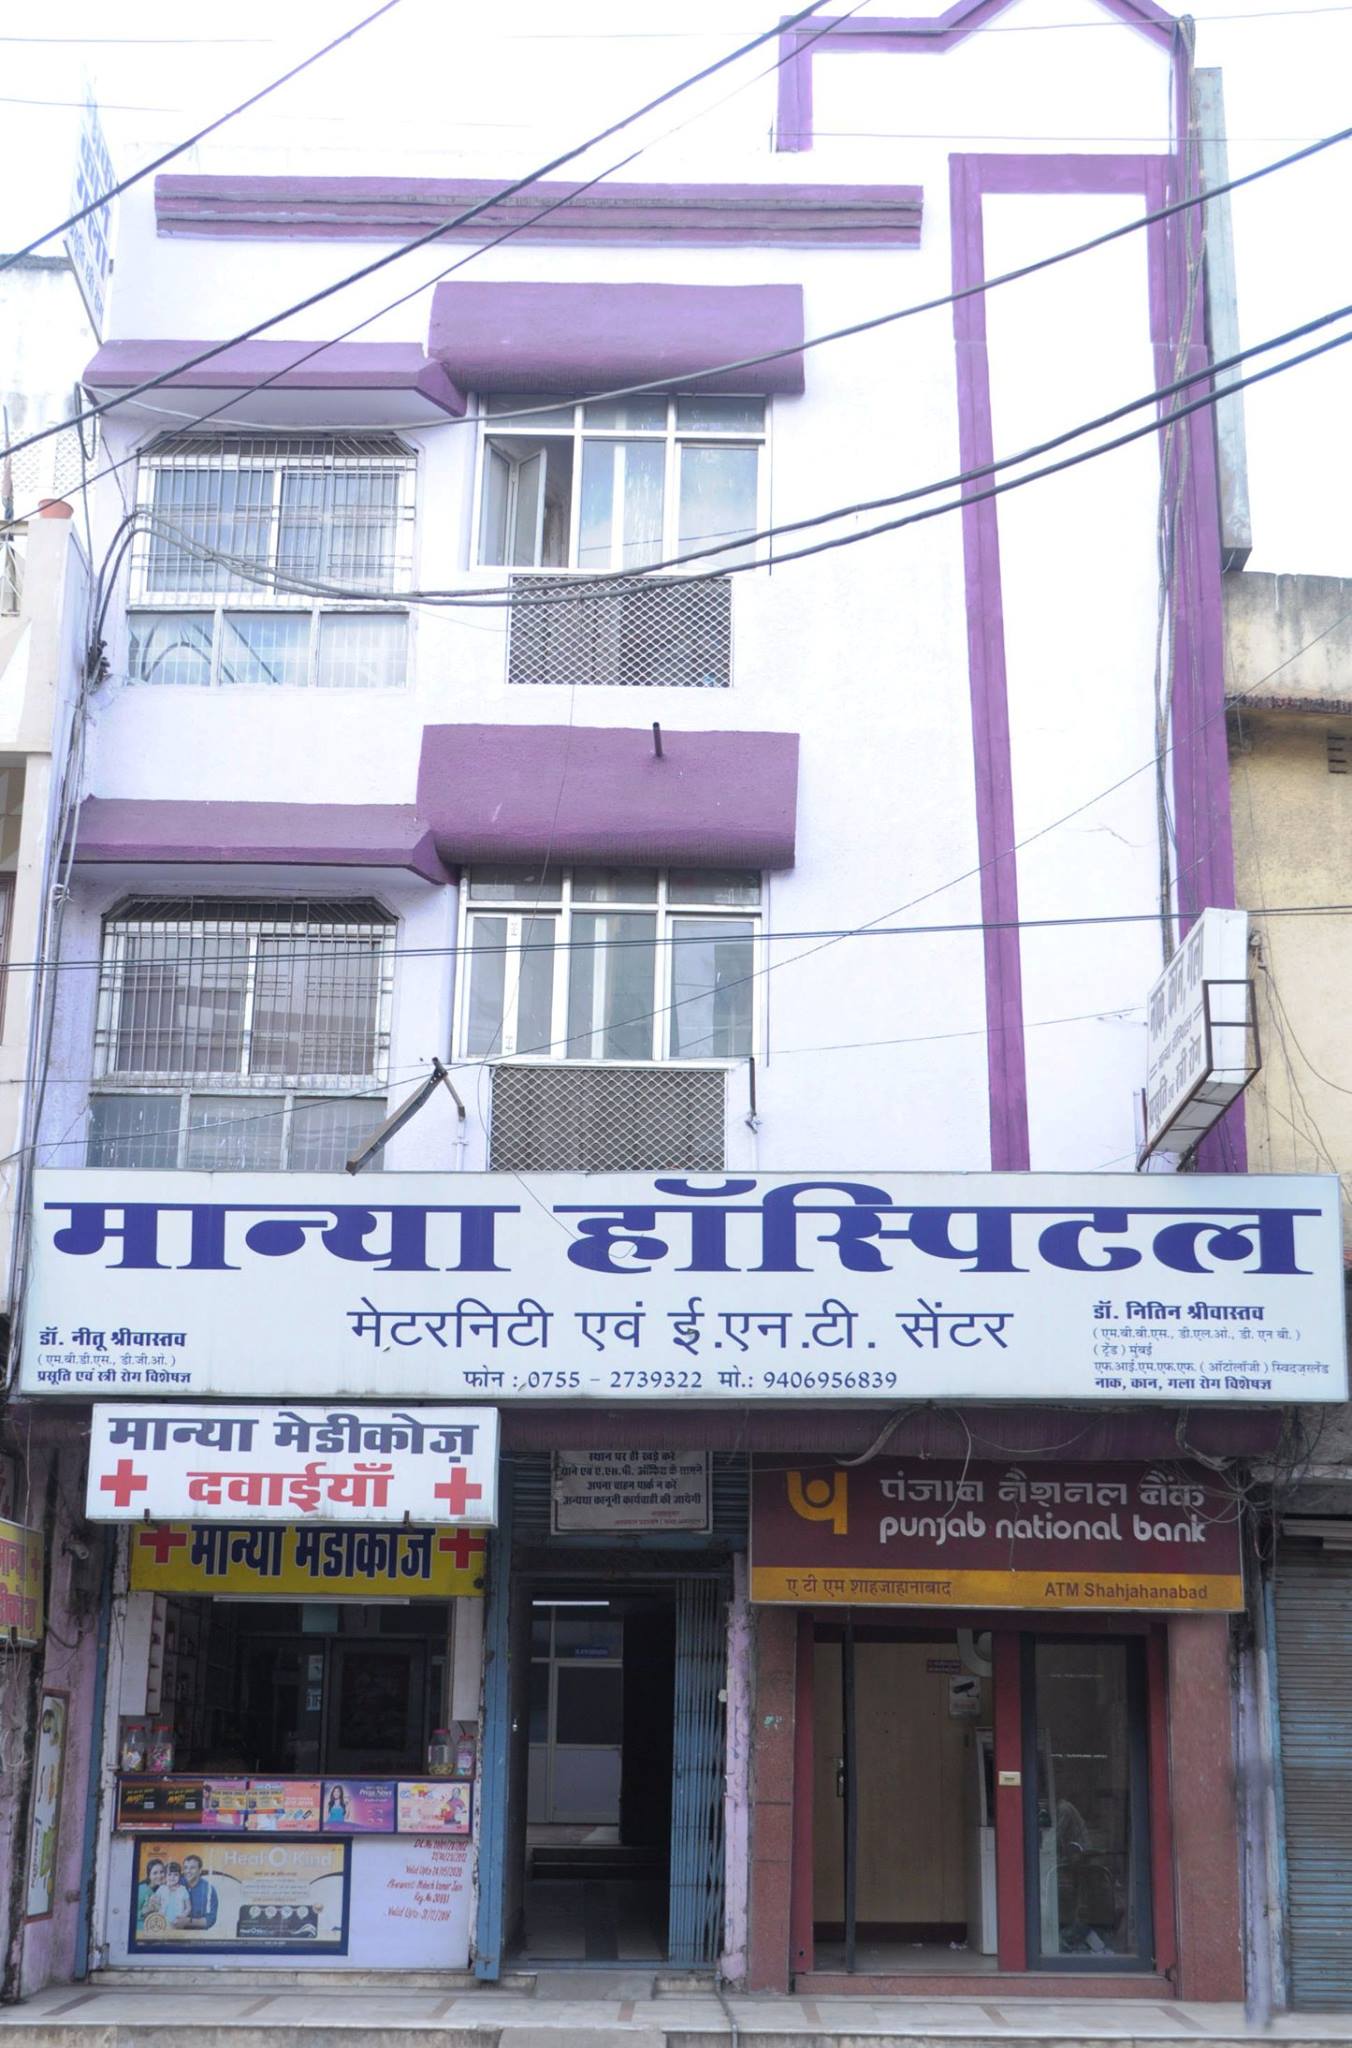 Manya Hospital - Shahajahanabad, Bhopal